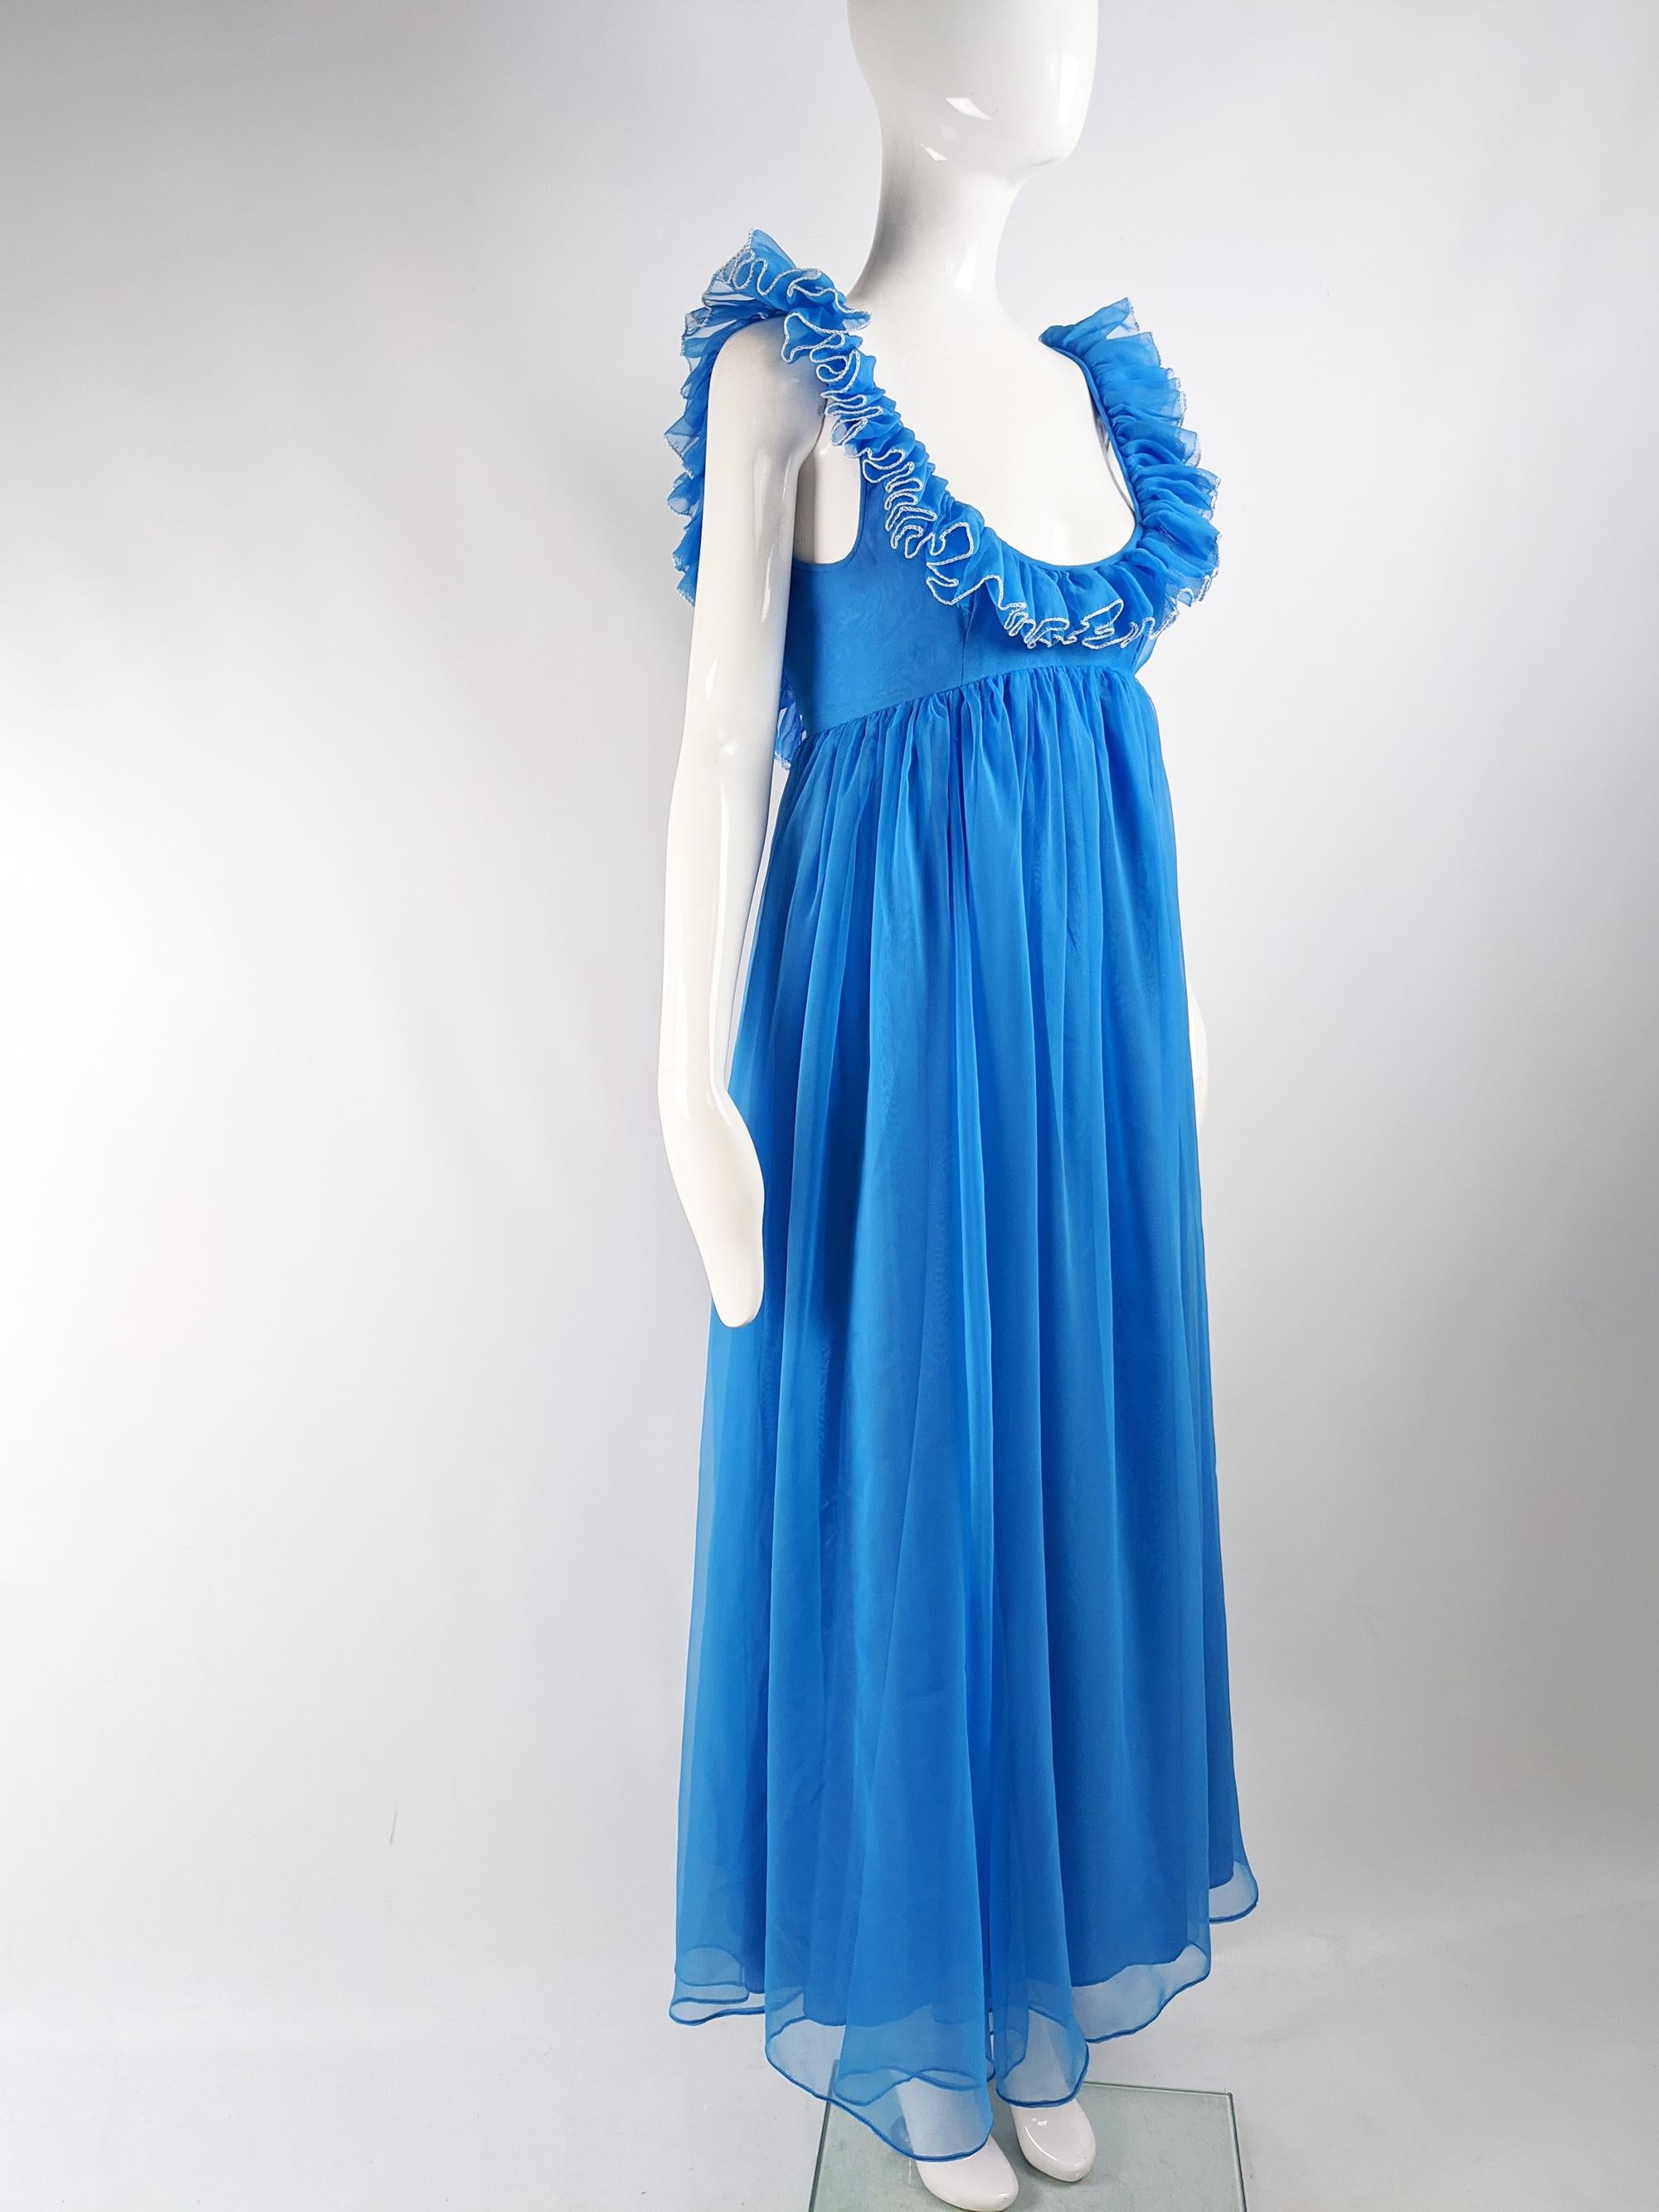 Jean Varon Vintage 1960s Blue Chiffon Maxi Evening Dress For Sale 2